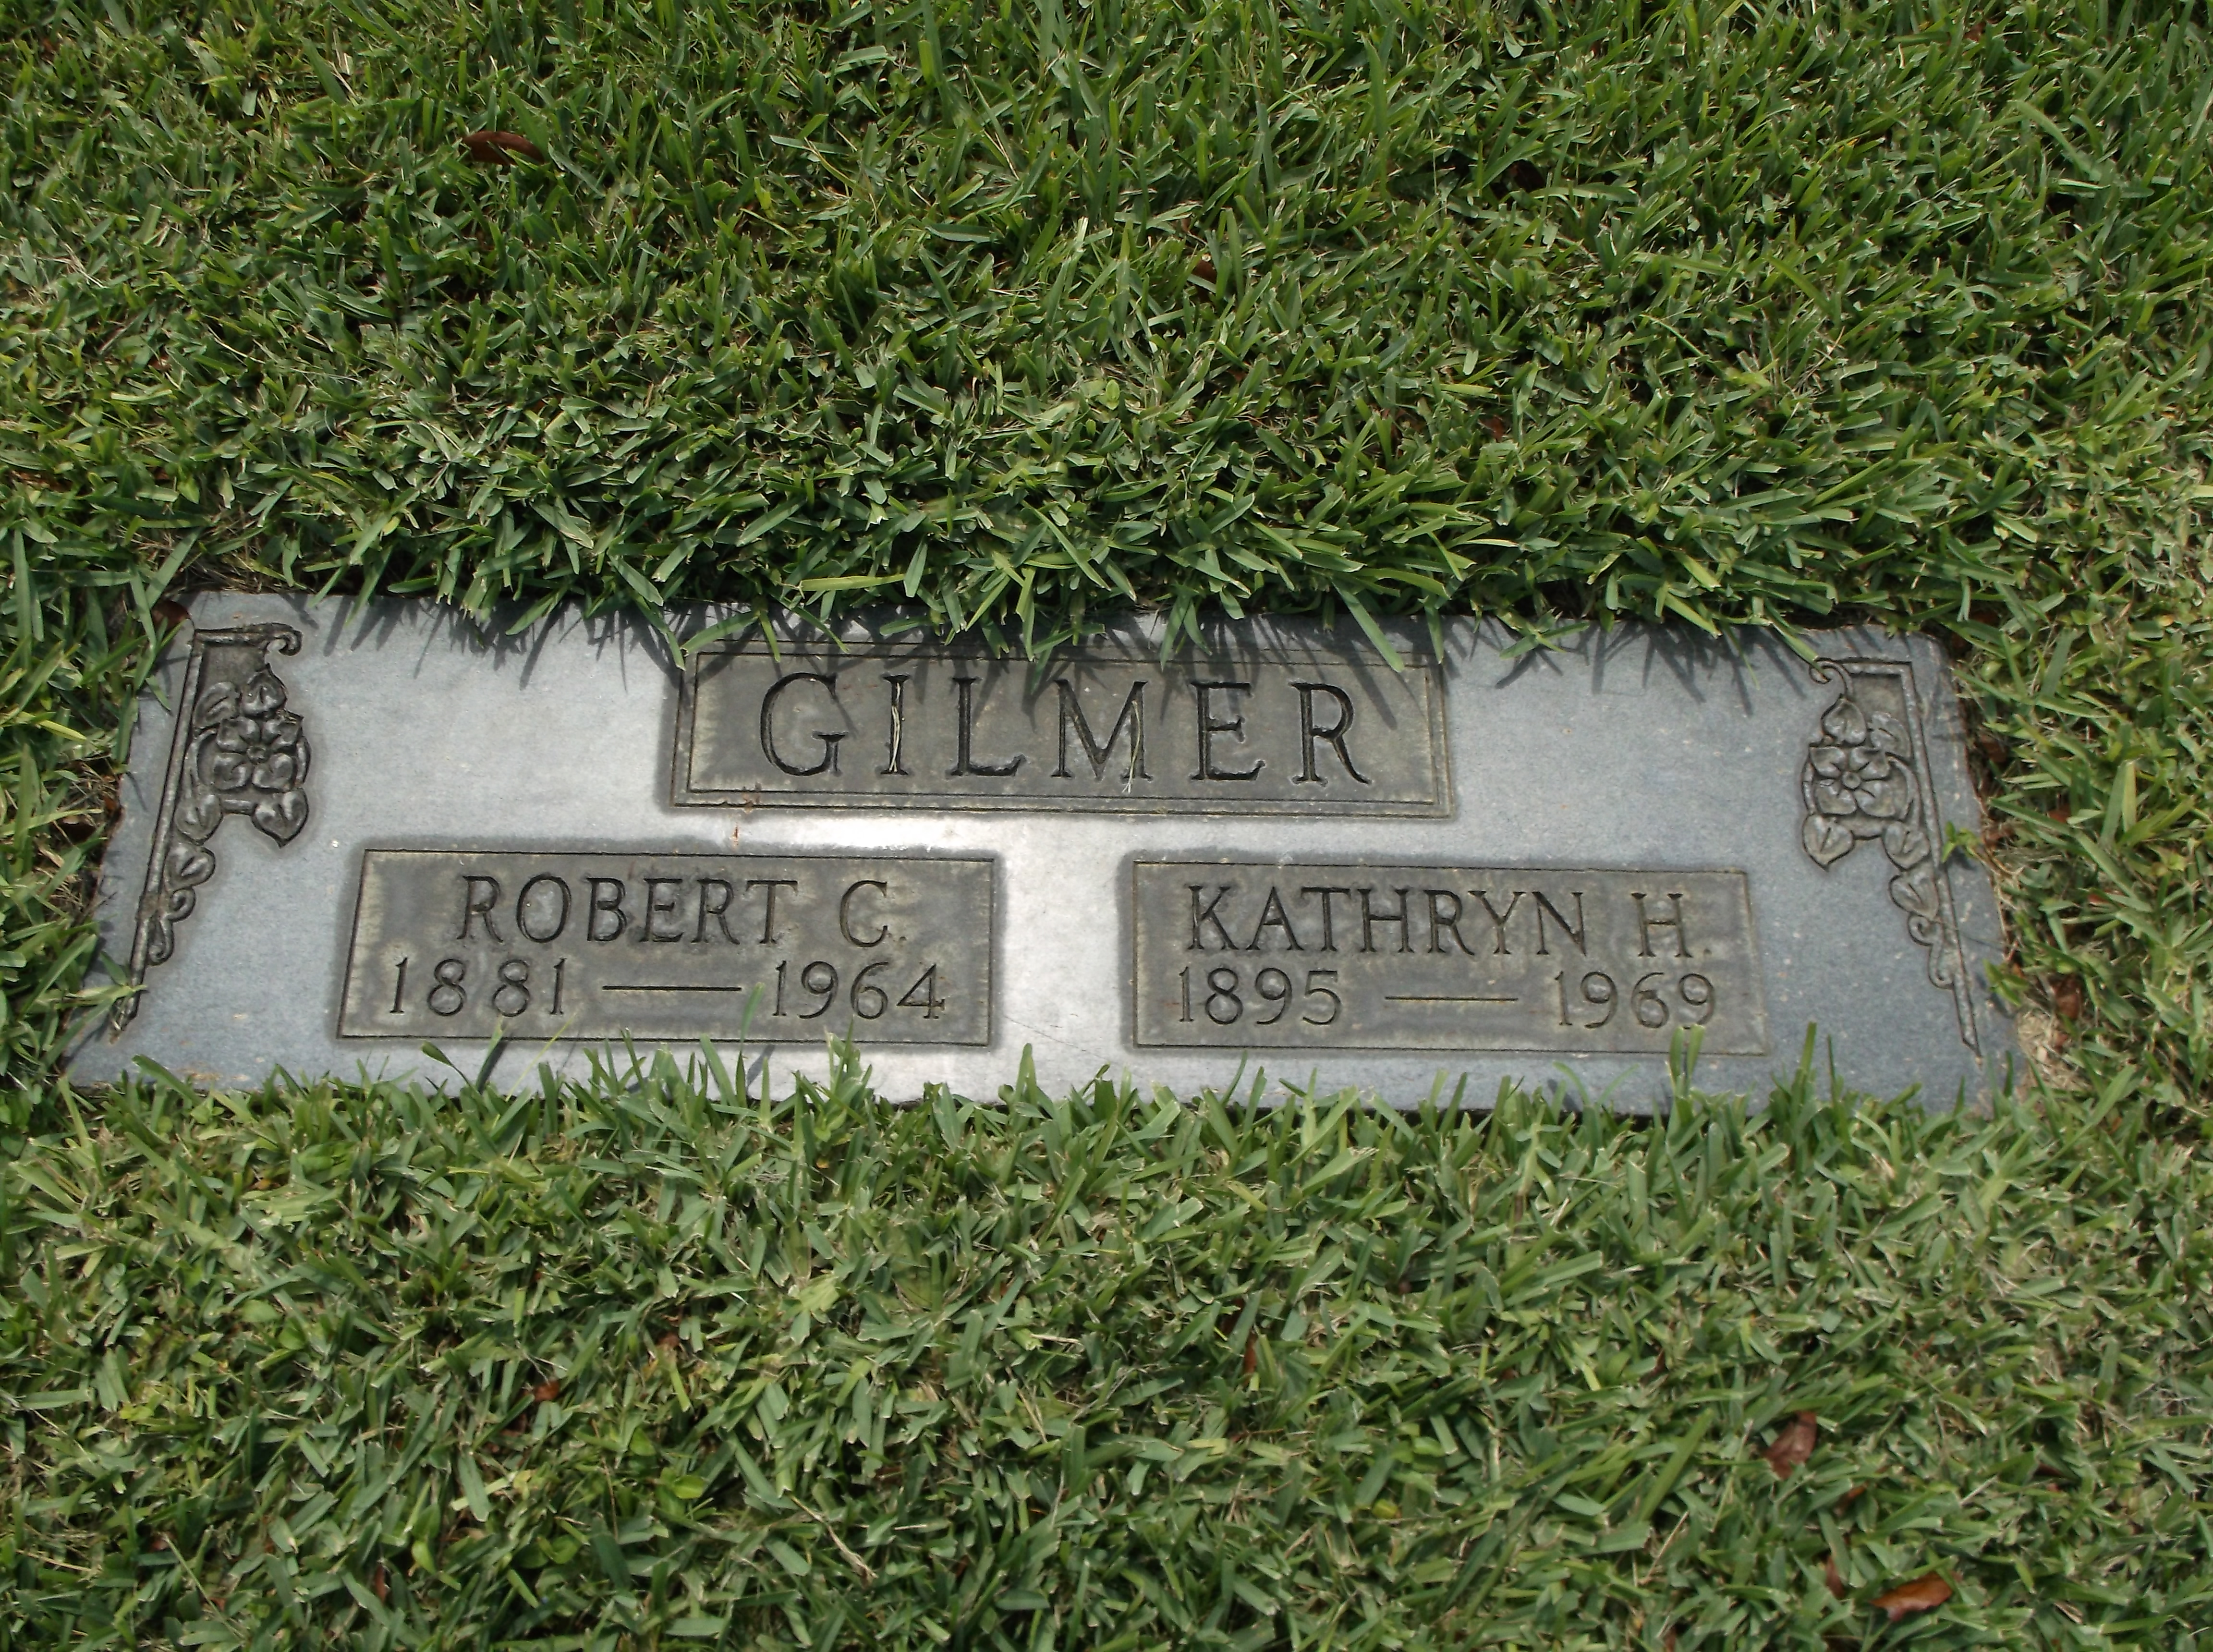 Robert C Gilmer